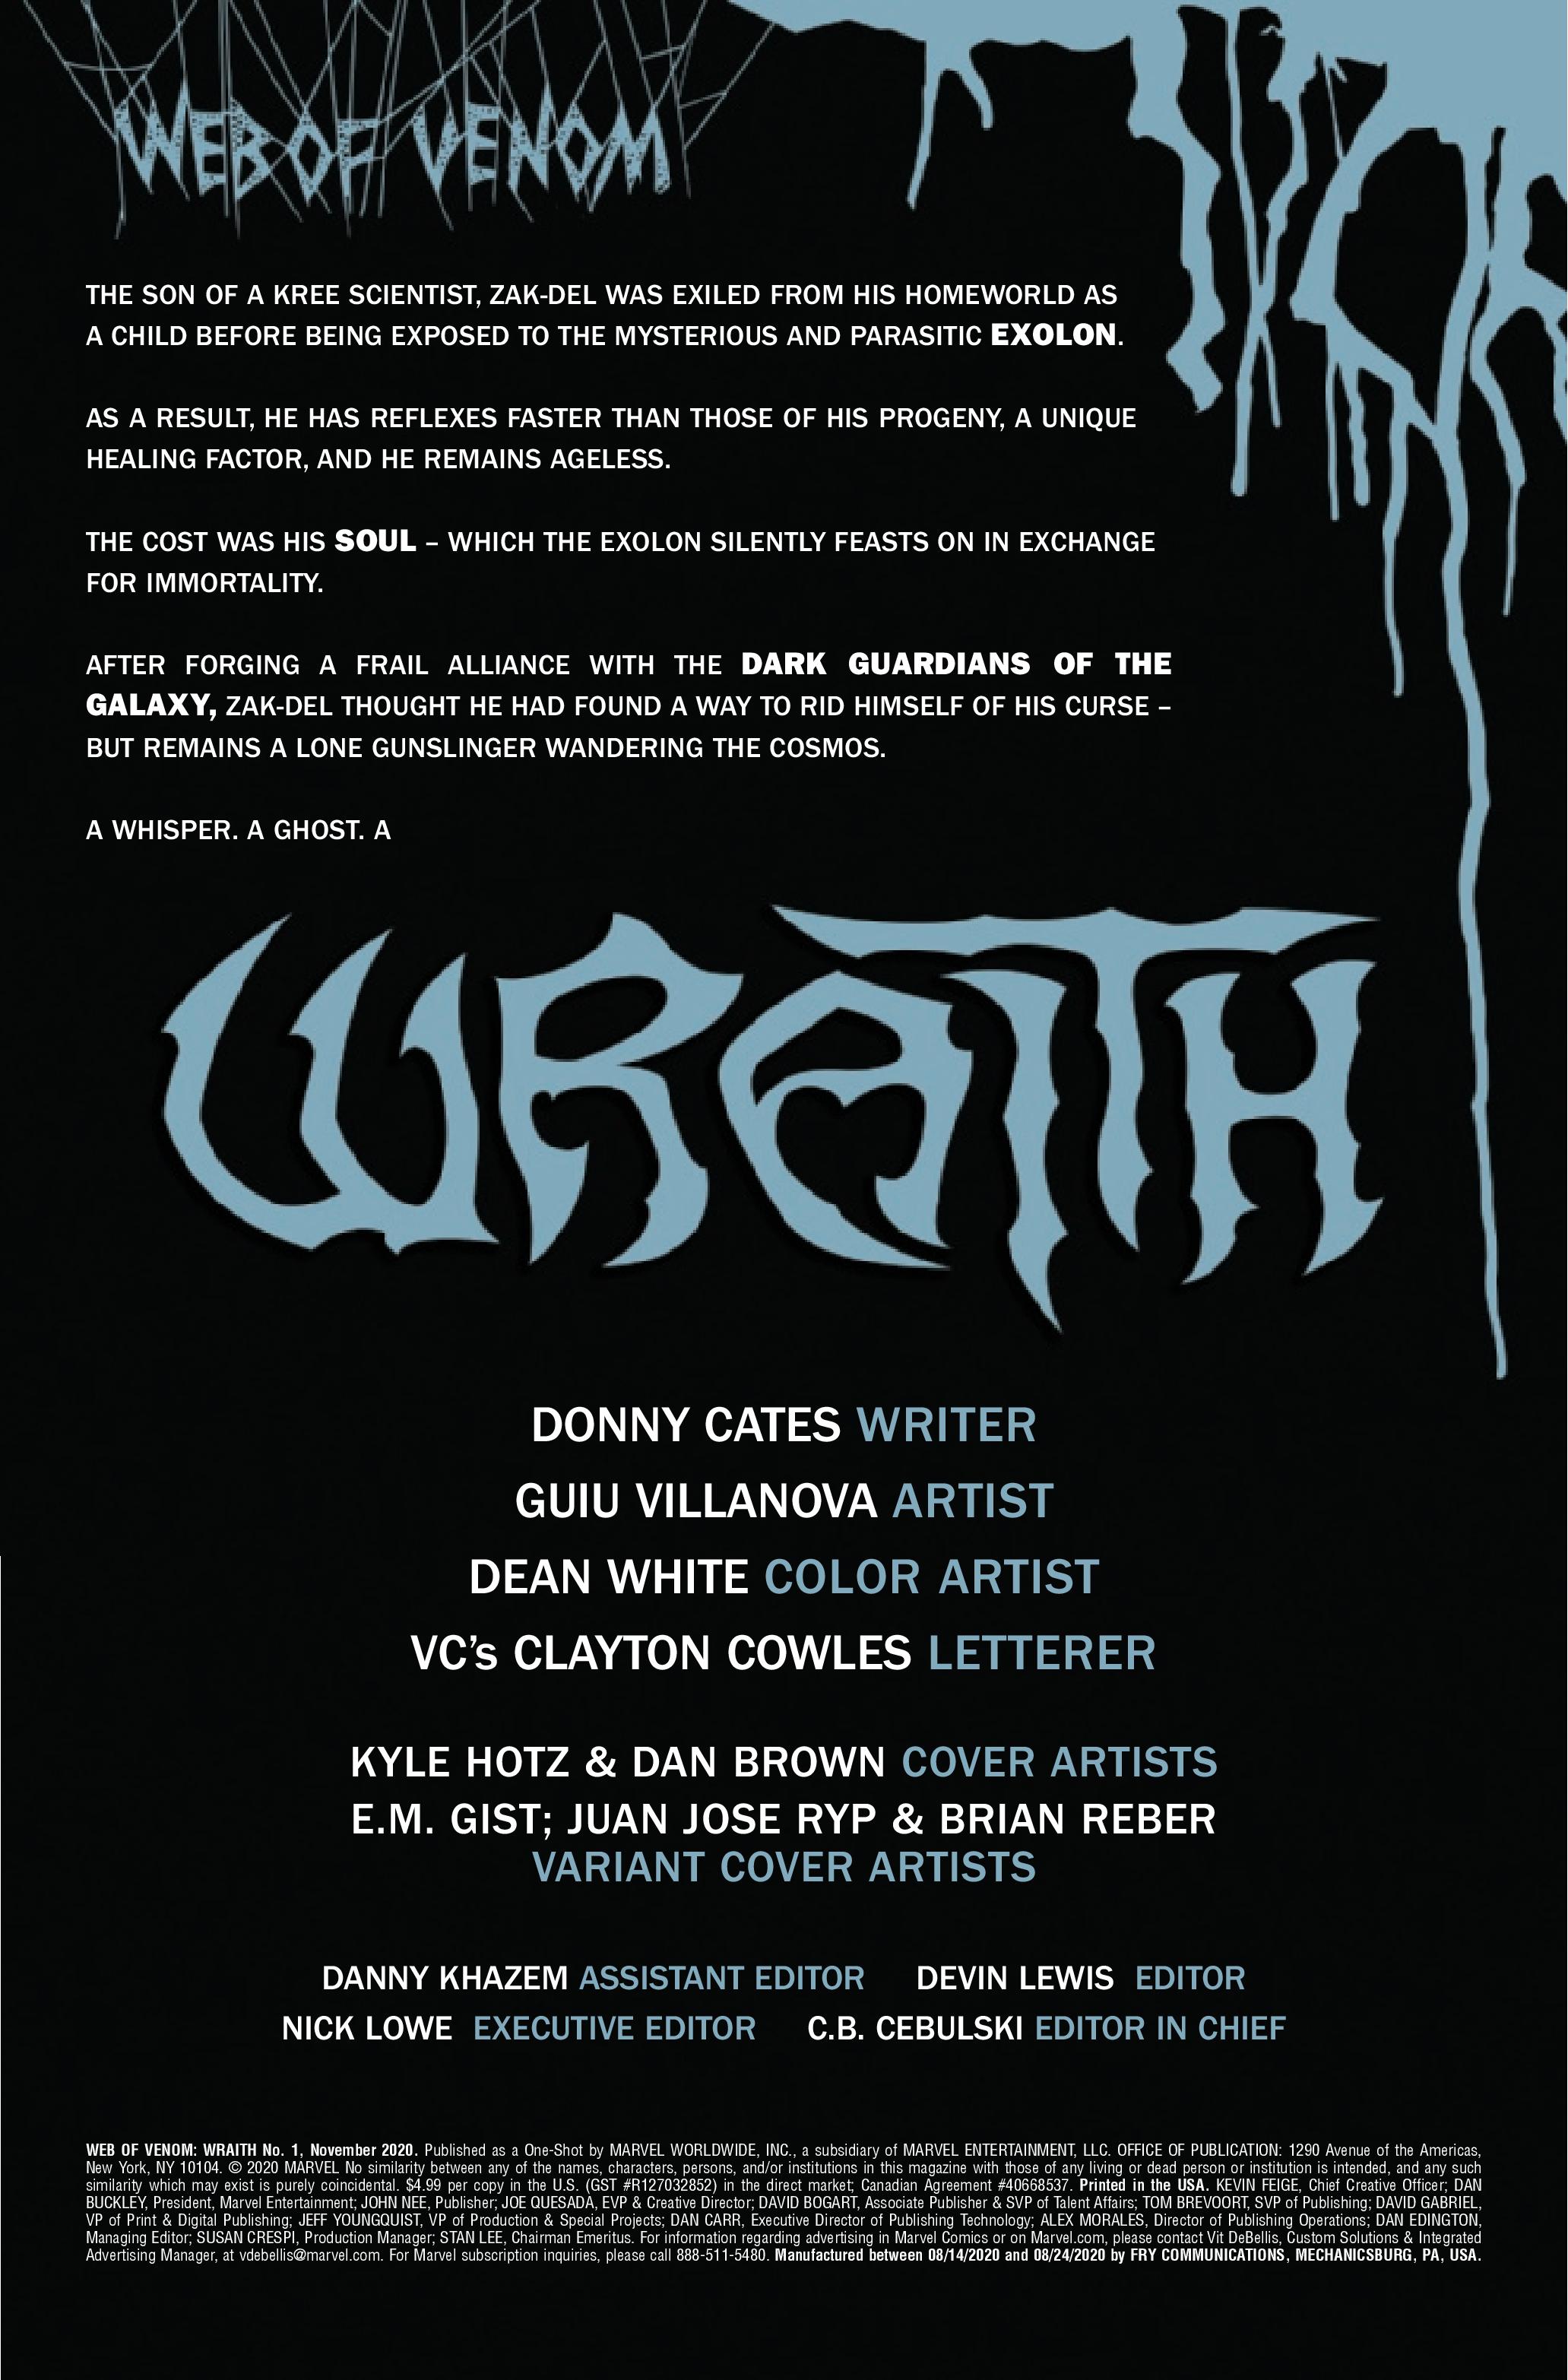 Web of Venom Wraith #1